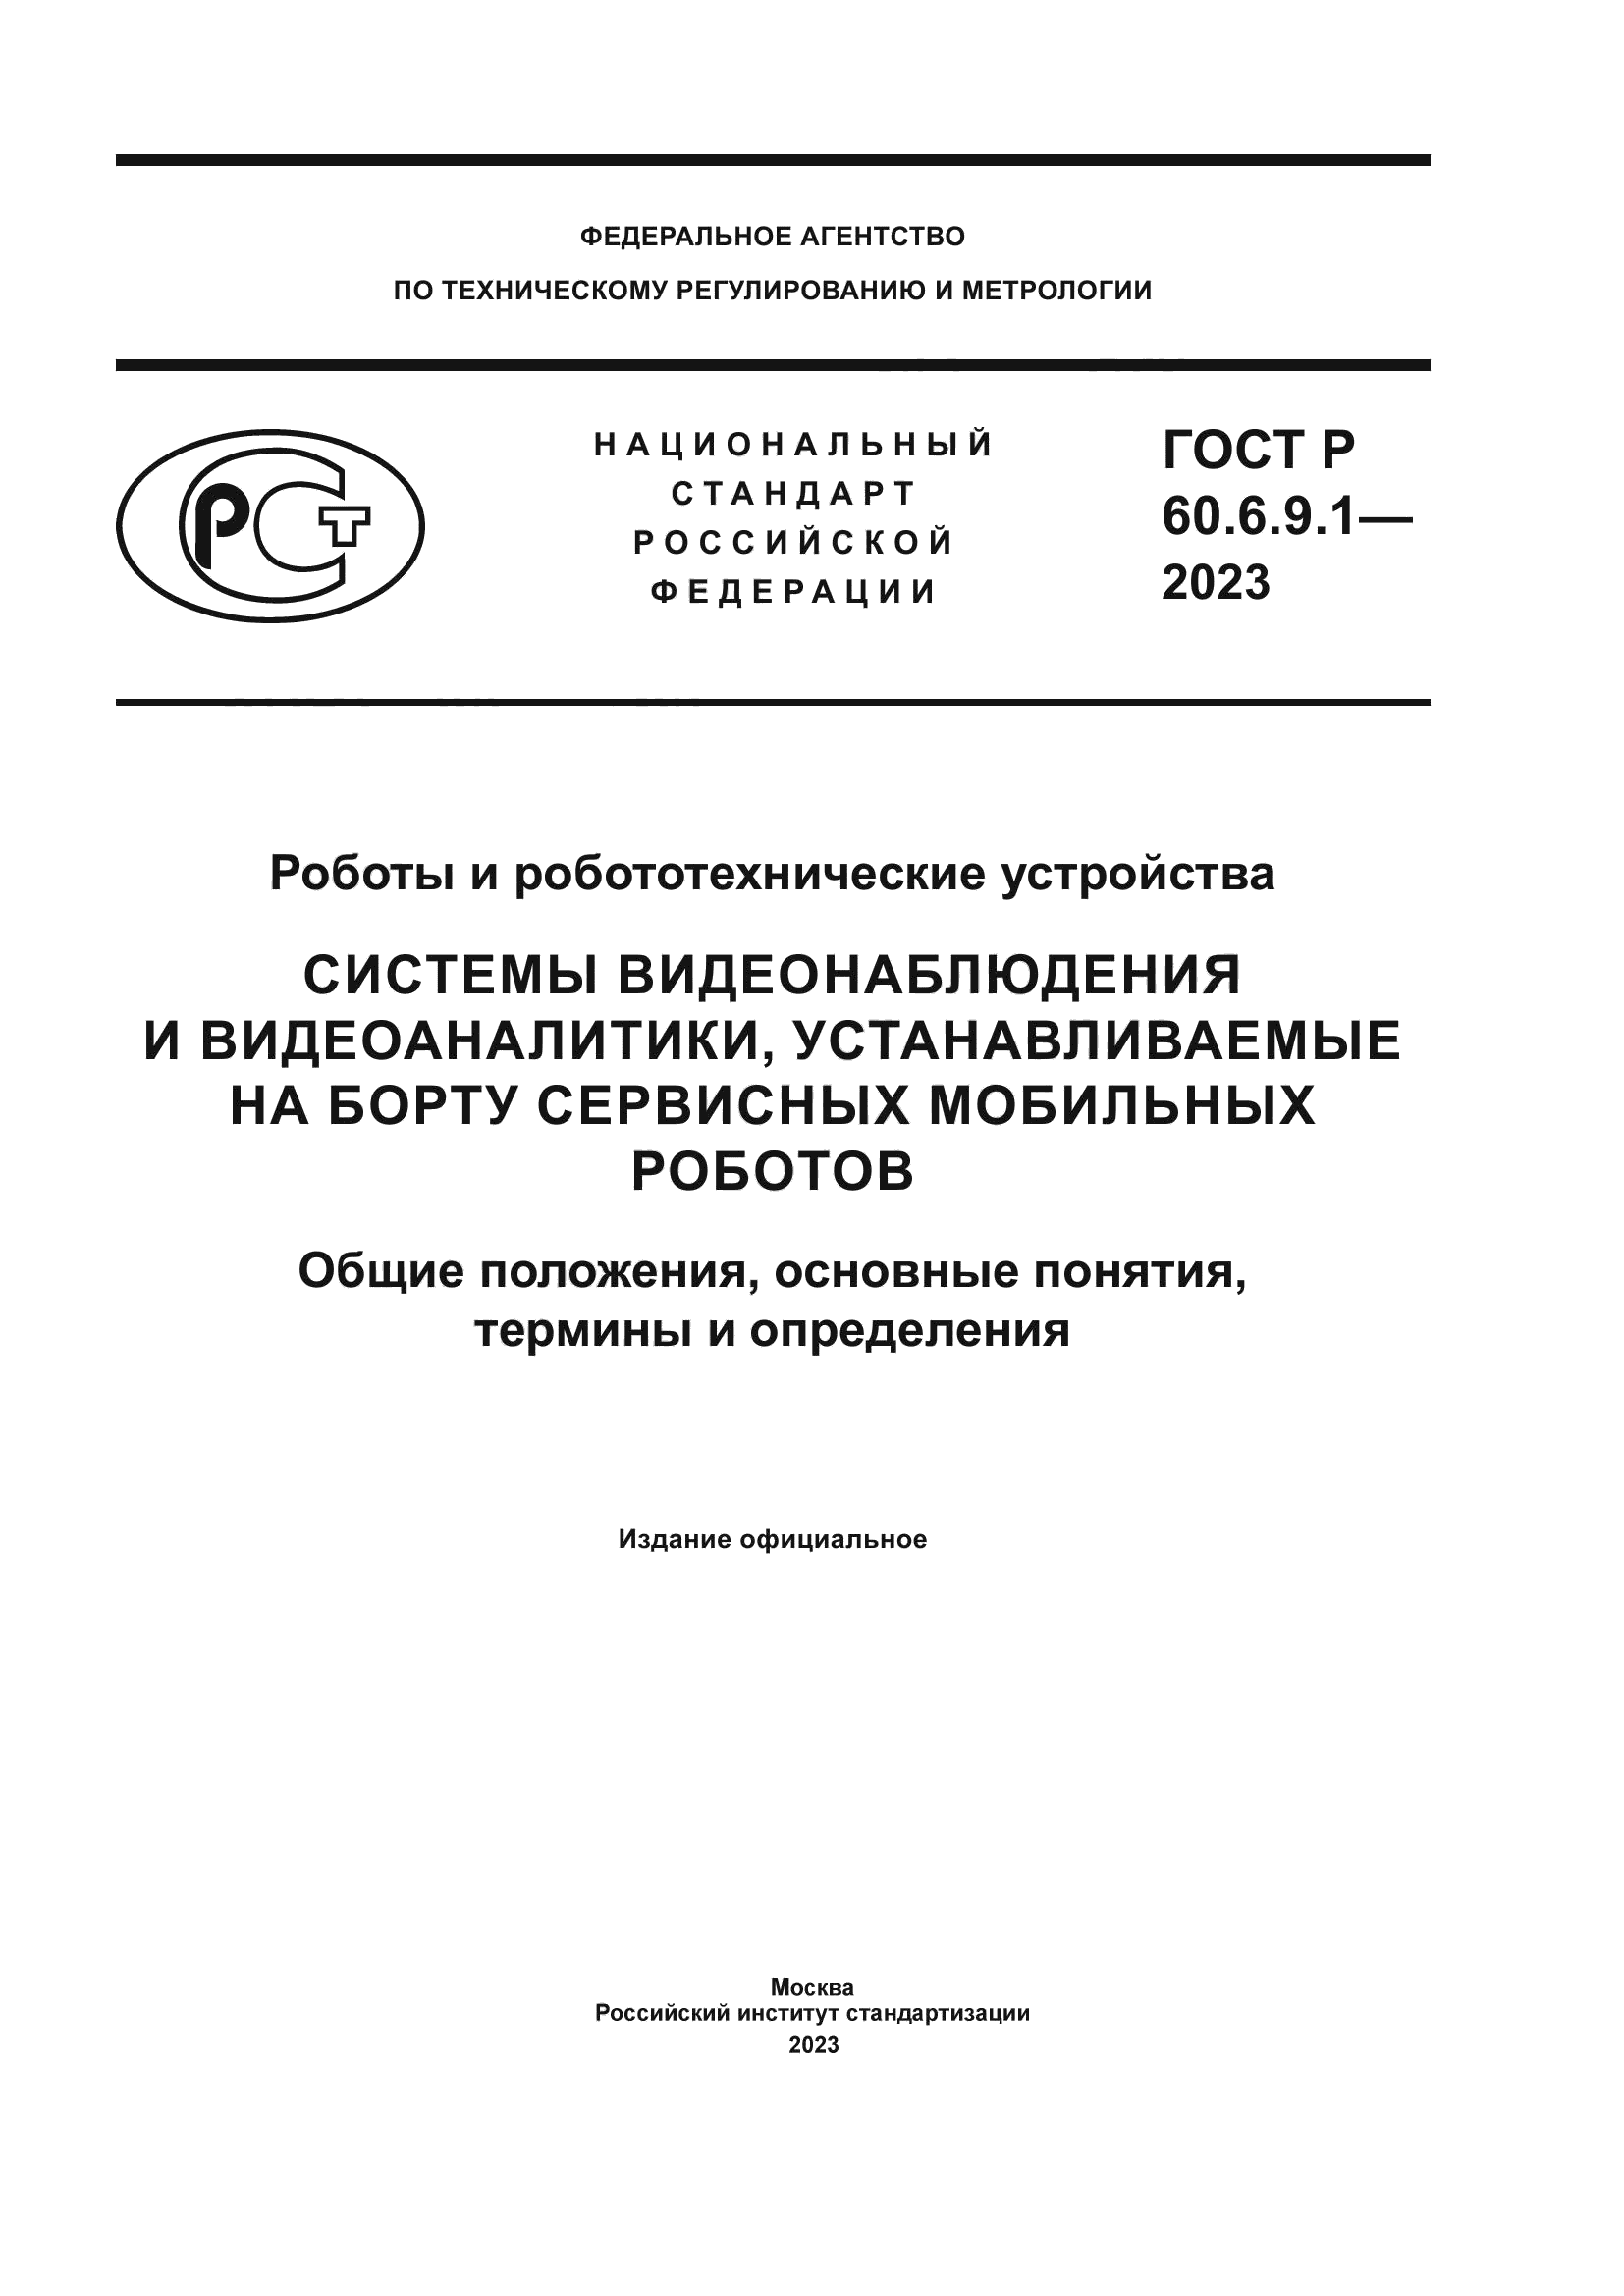 ГОСТ Р 60.6.9.1-2023